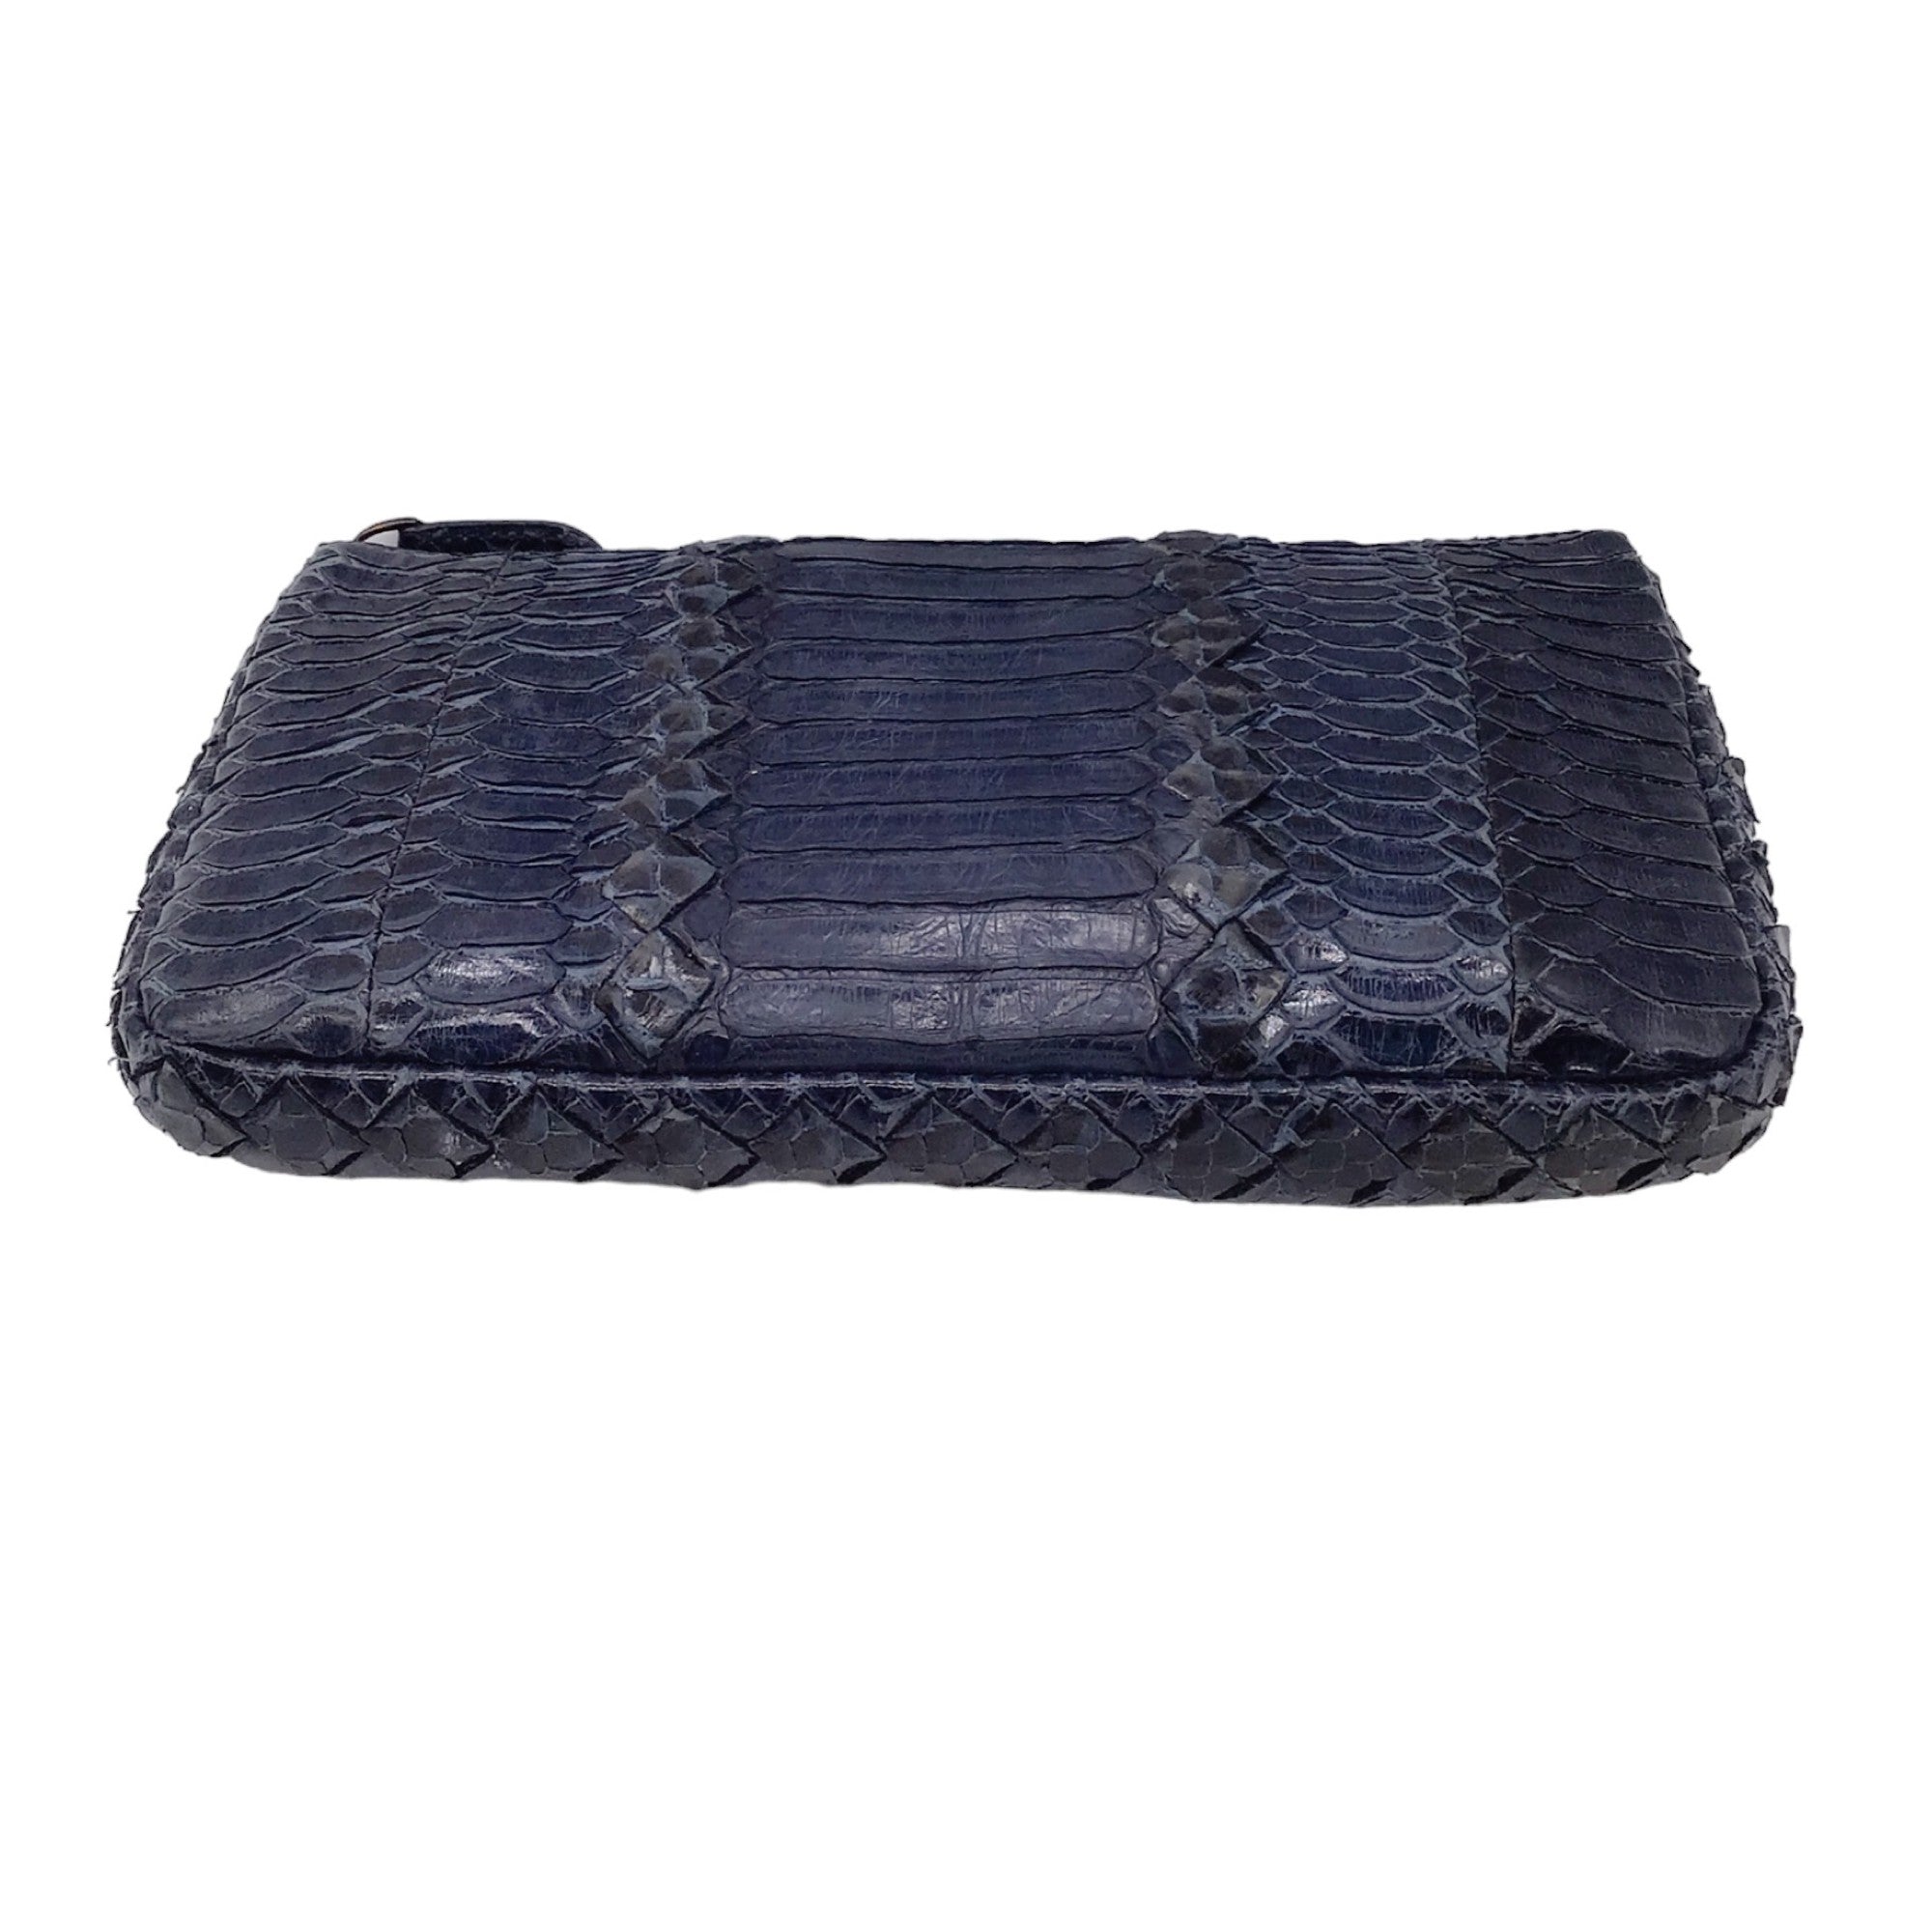 Bottega Veneta Navy Blue Python Skin Leather Zip Pouch Bag